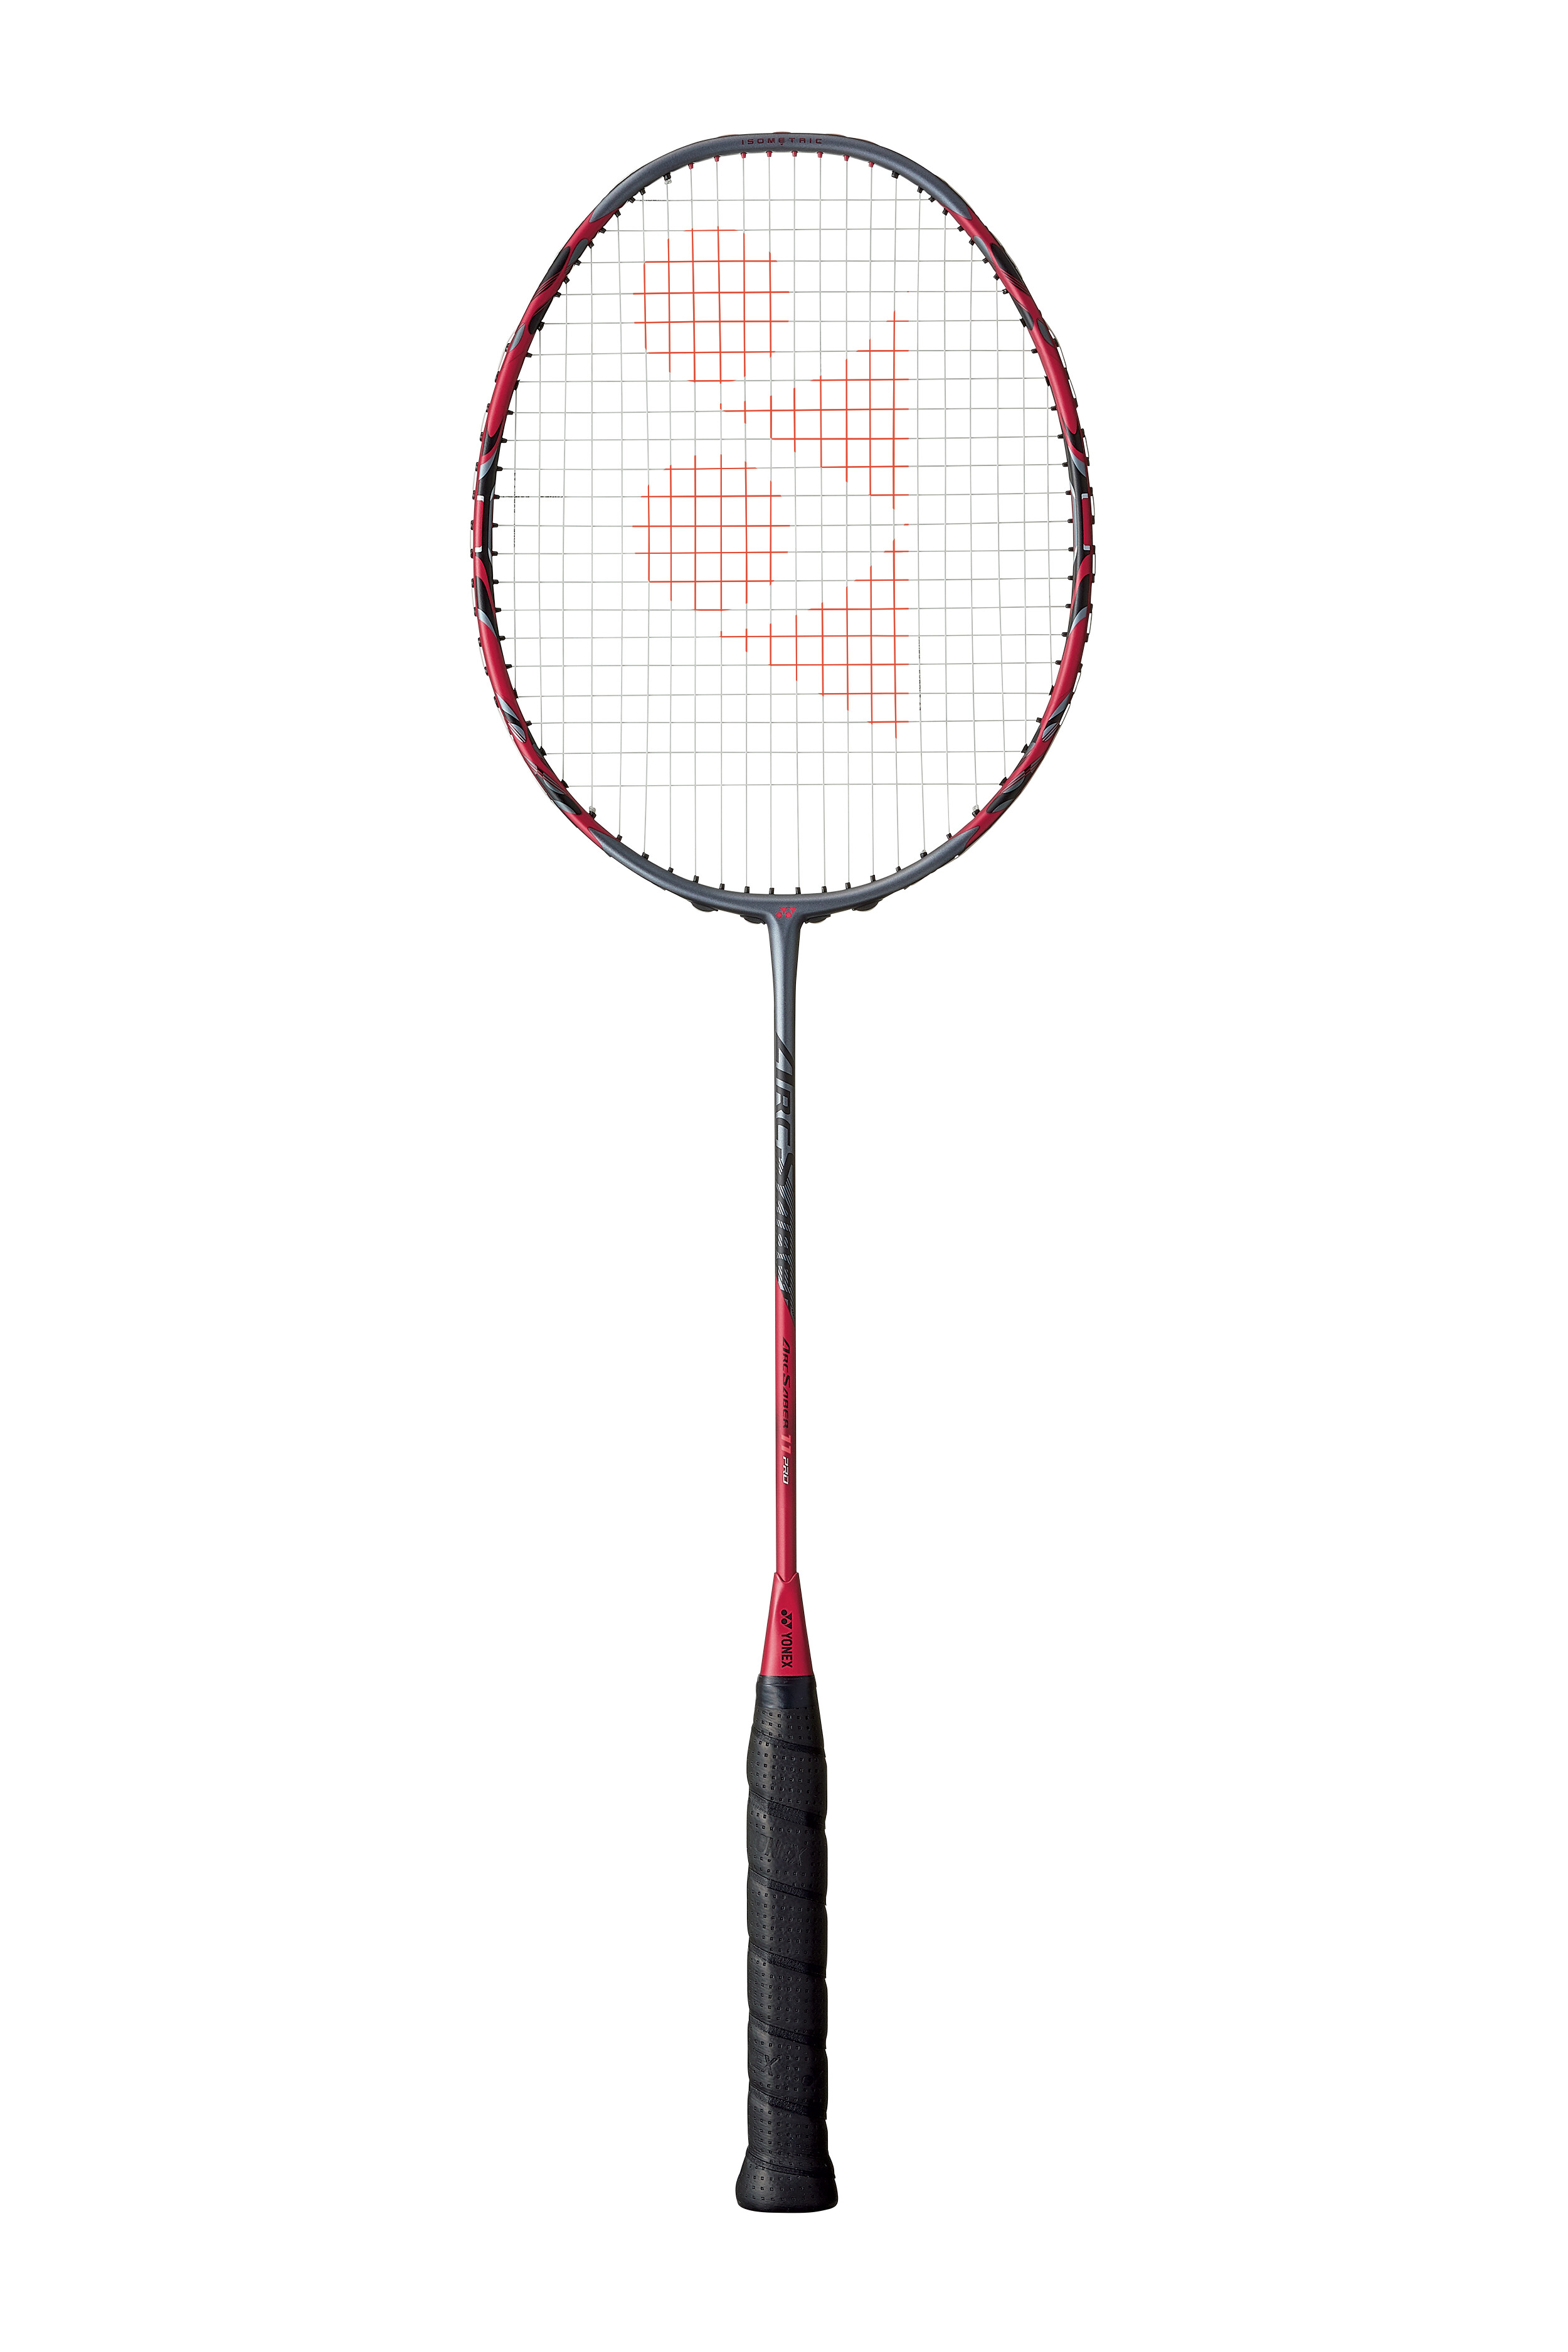 YONEX ArcSaber 11 Pro 3U Badminton Racquet - Grayish Pearl - Unstrung